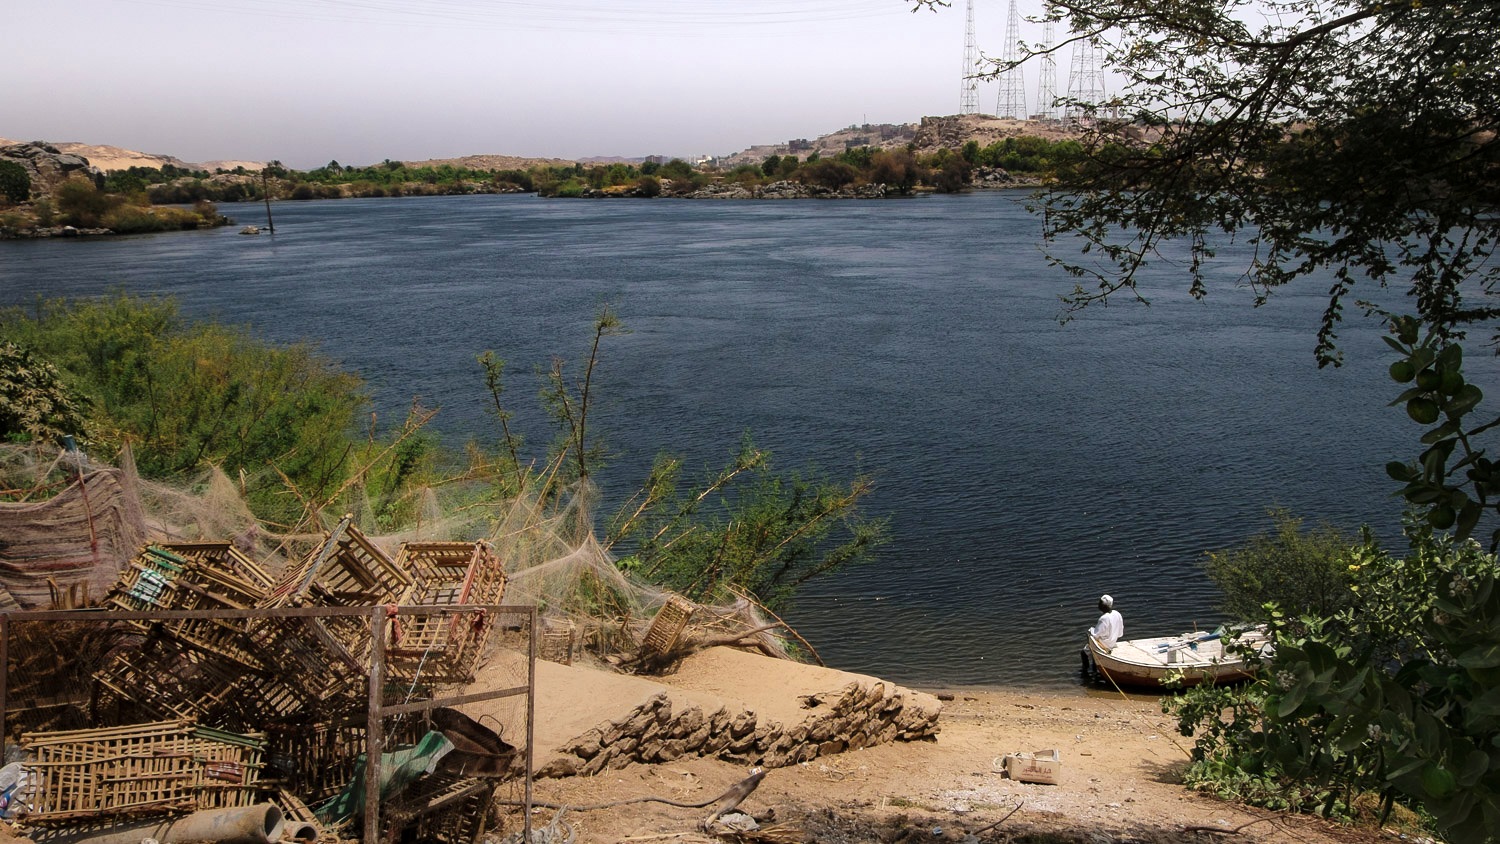 West Suheil, an intact Nubian village not submerged during reservoir construction (photo: Maya Hautefeuille)